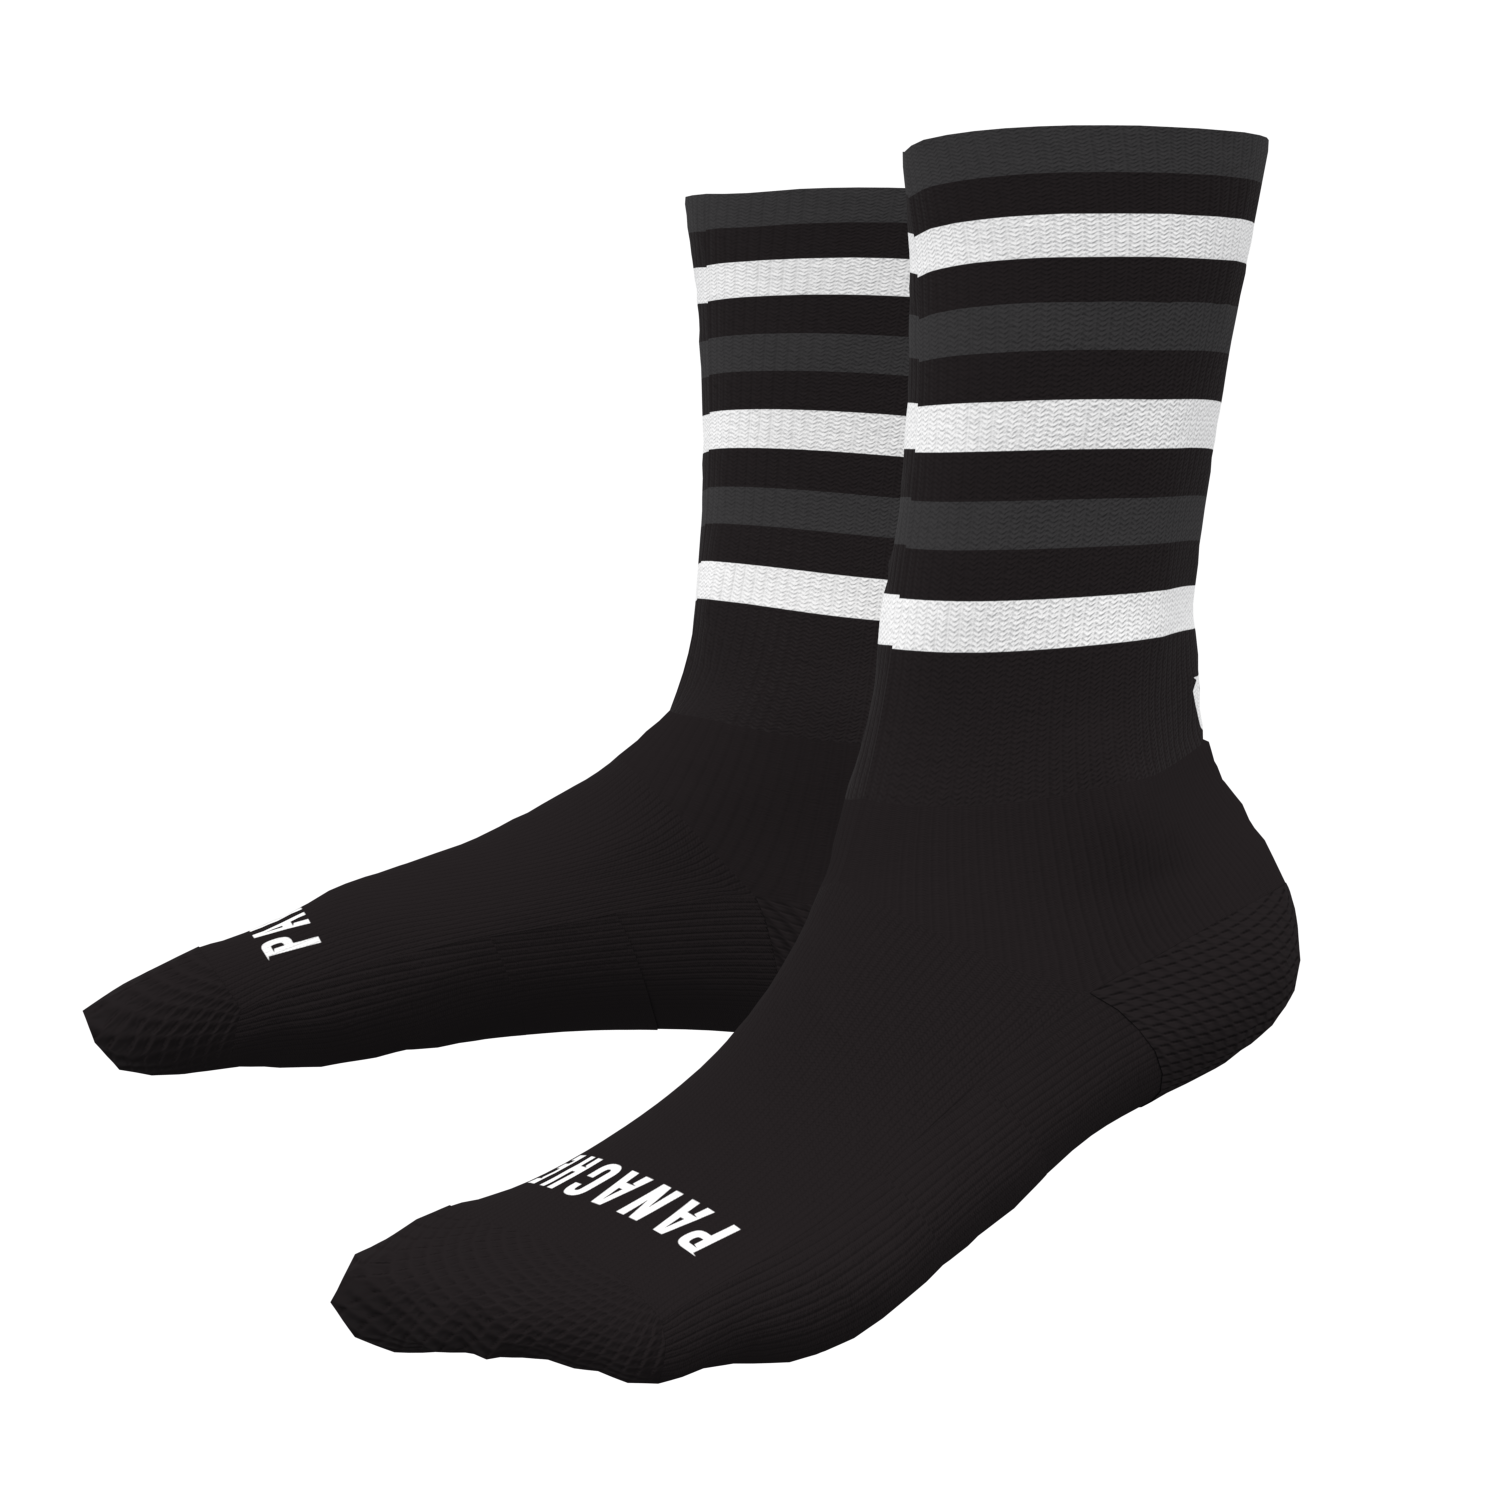 Merino Wool Socks - BLACK with White/Grey stripes